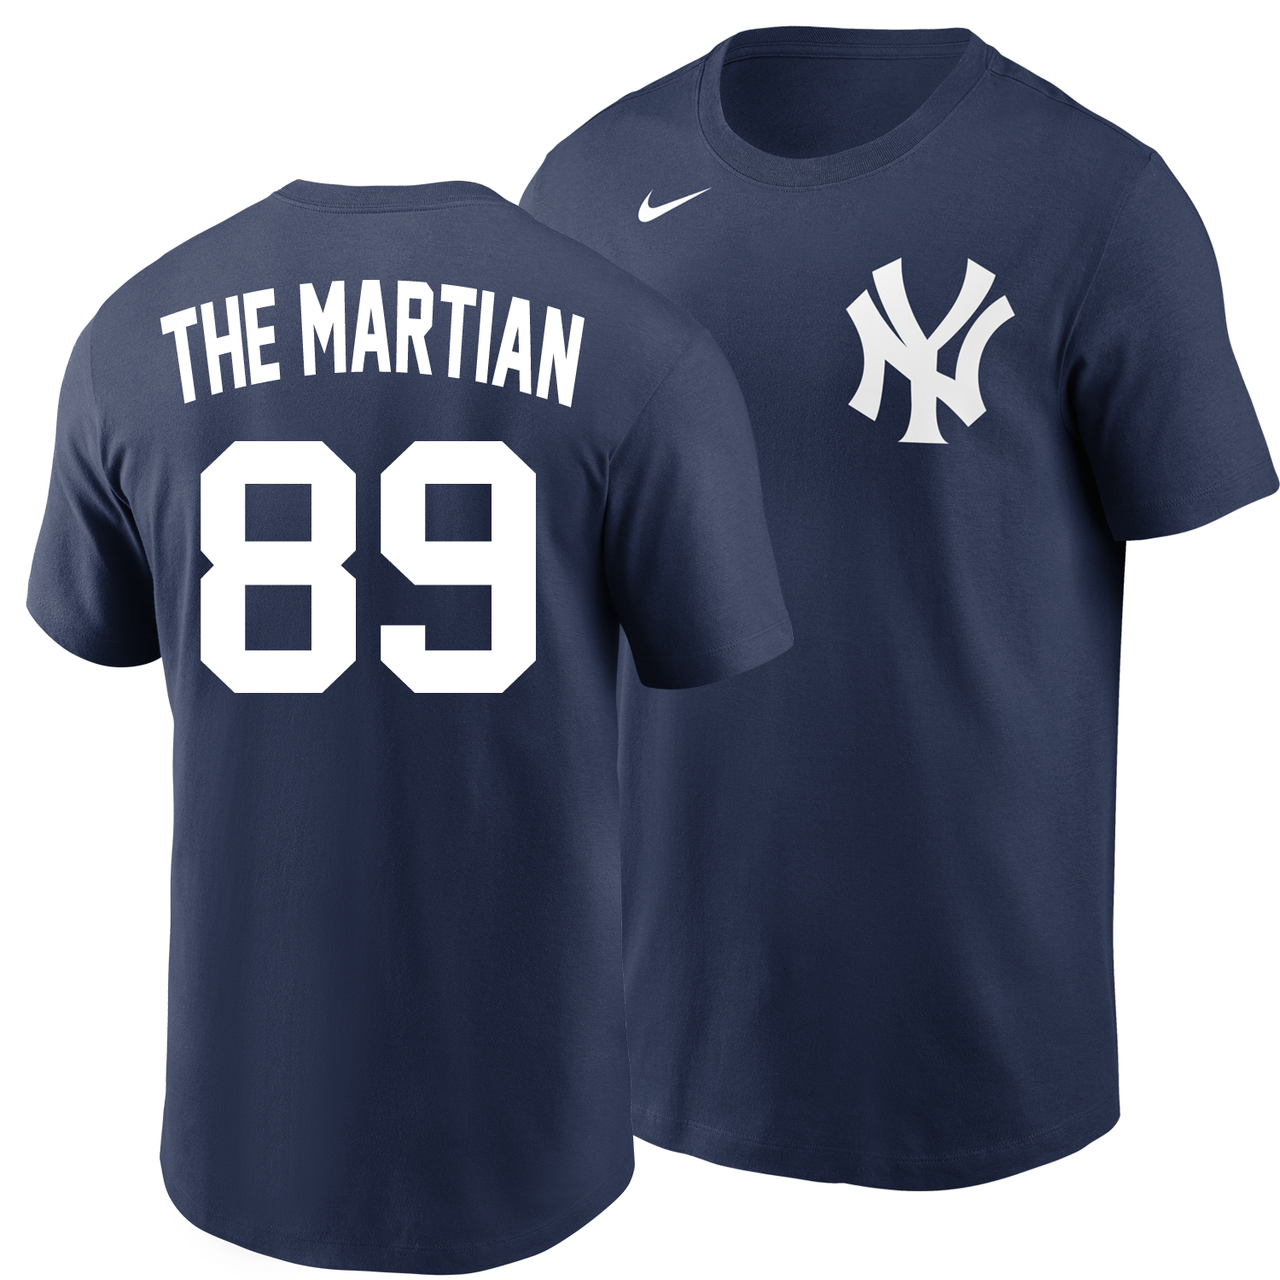 The Martian Jasson Dominguez T-Shirt - Navy NY Yankees Adult T-Shirt